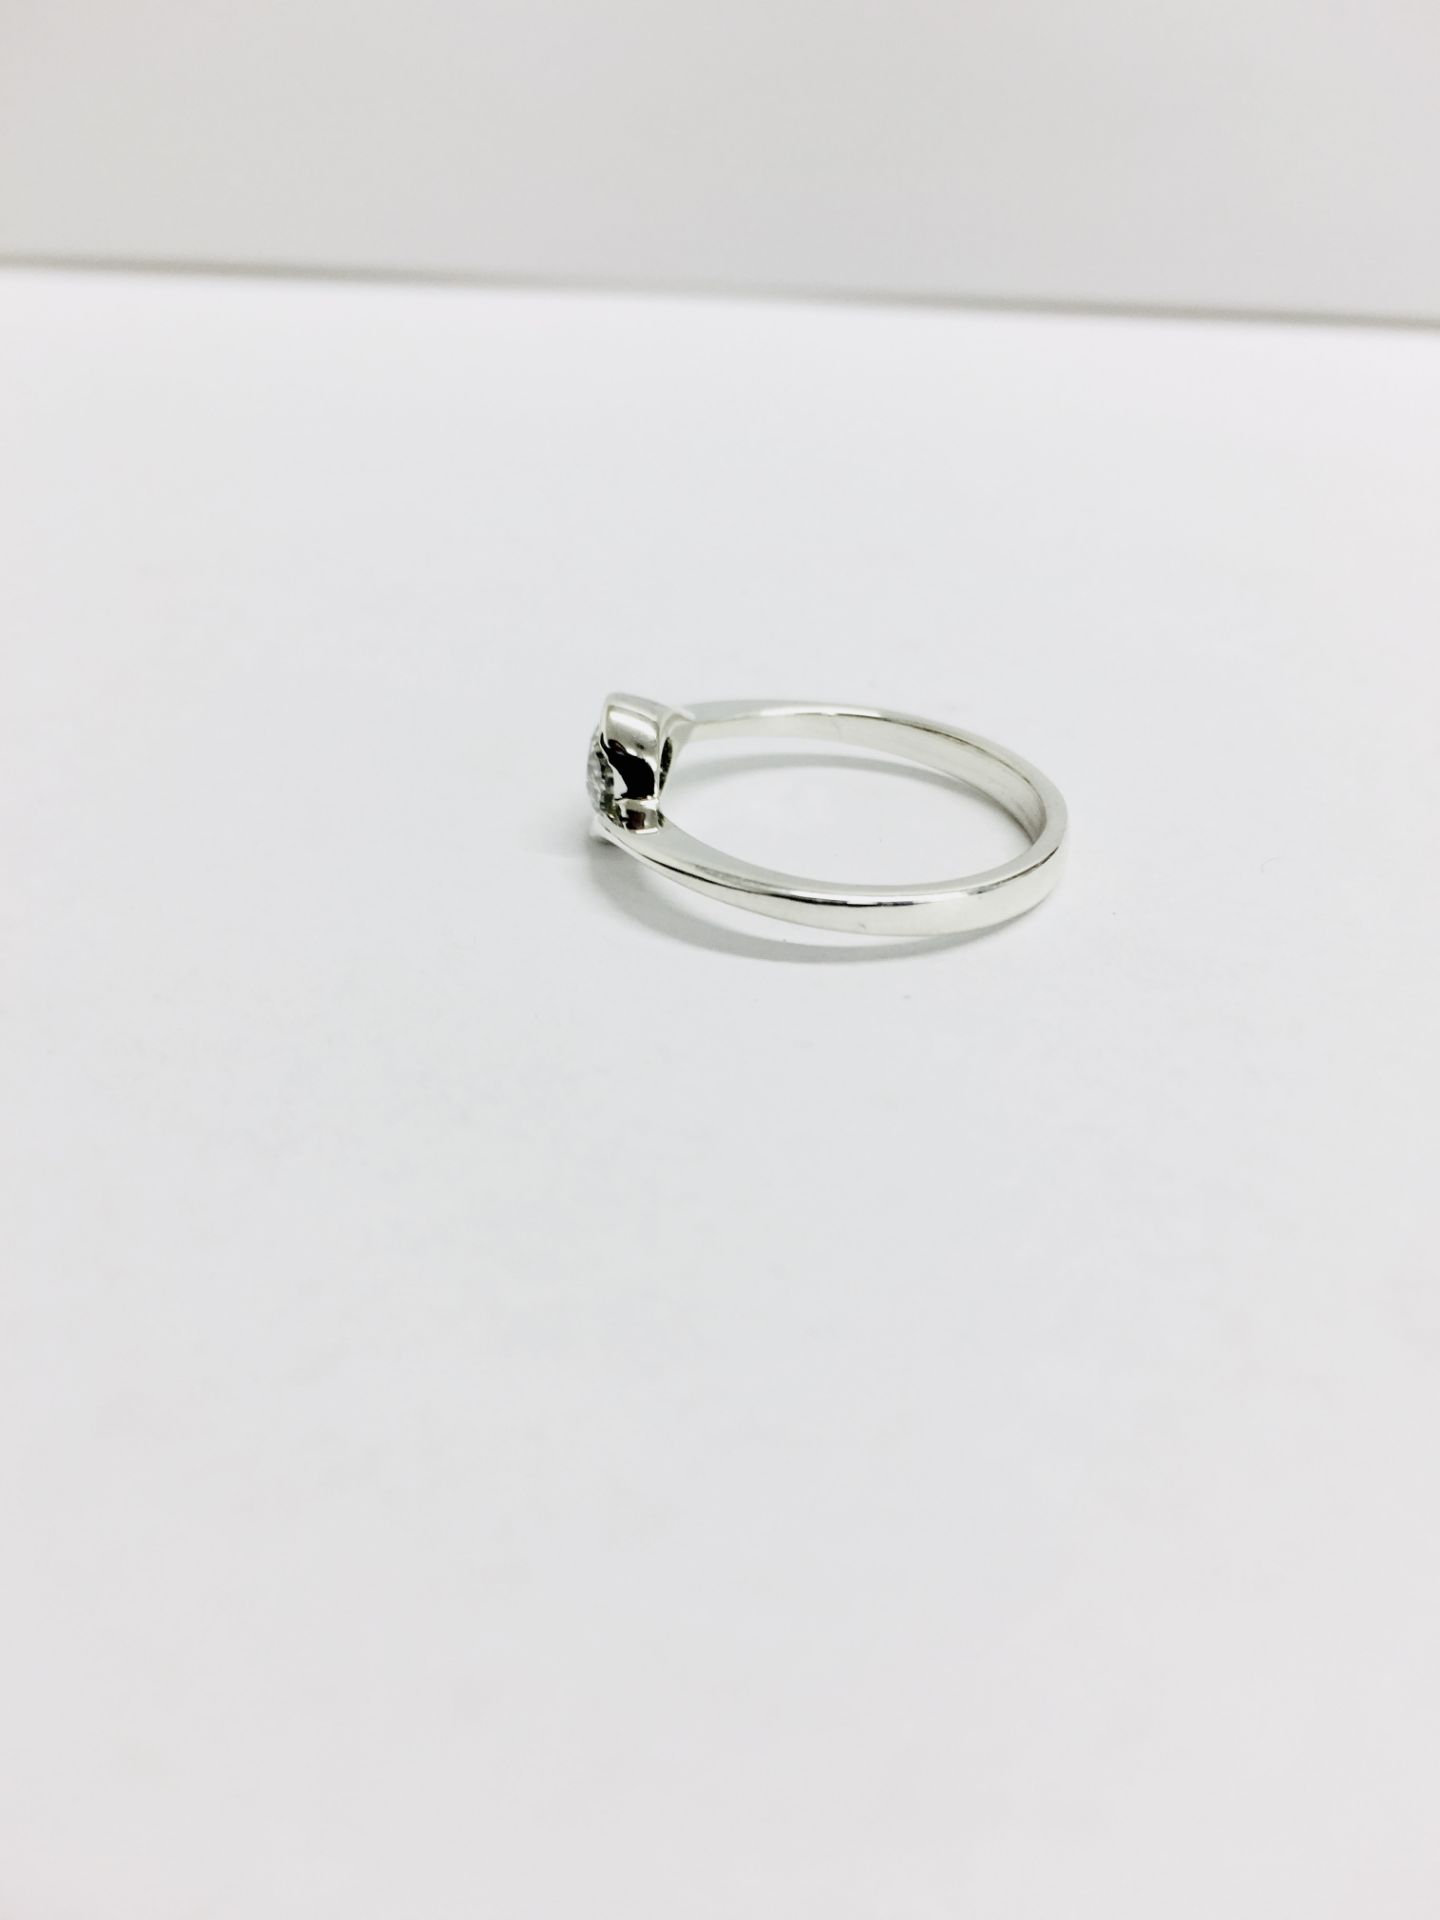 platinum diamond twist style ring,0.50ct E colour vvs2 clarity ,5.89gms platinum,uk size K,uk - Image 5 of 5